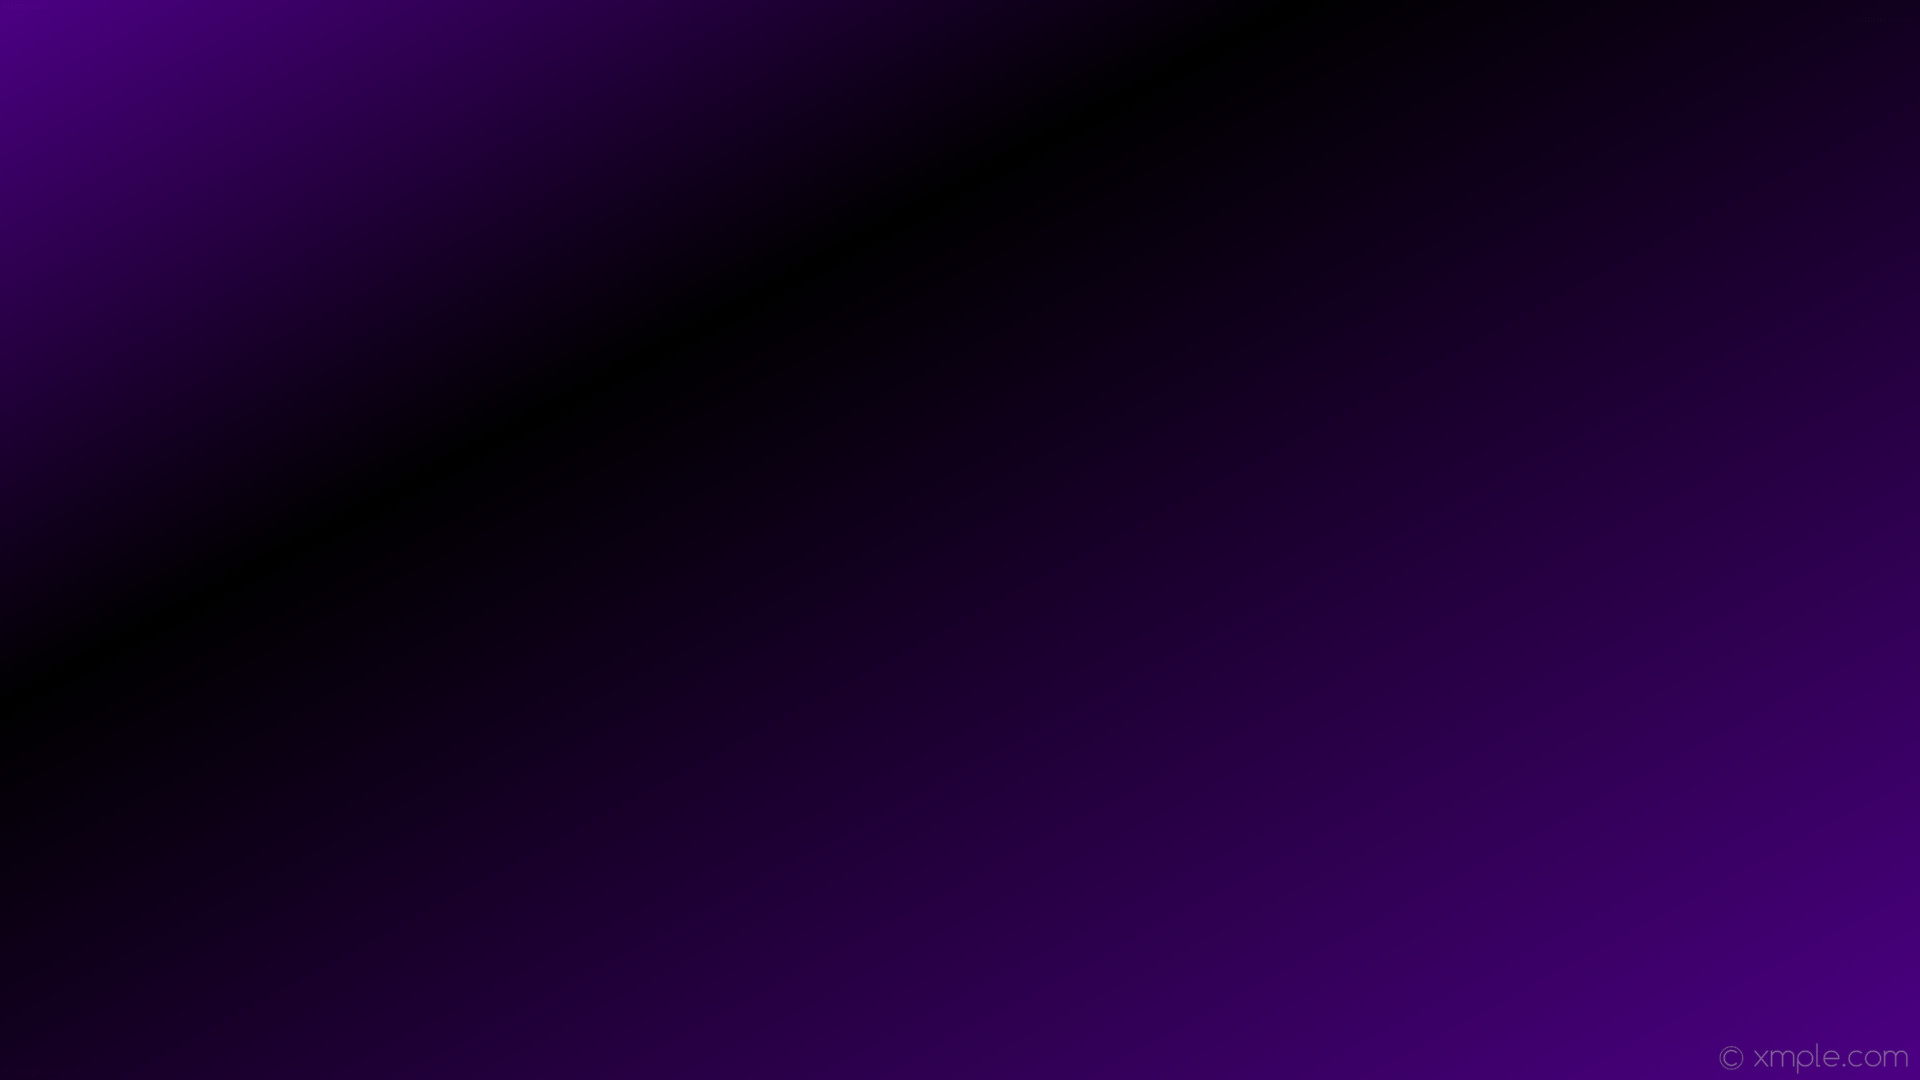 10 Best Black And Purple Wallpaper Full Hd 19201080 For Pc Desktop 2021 ...